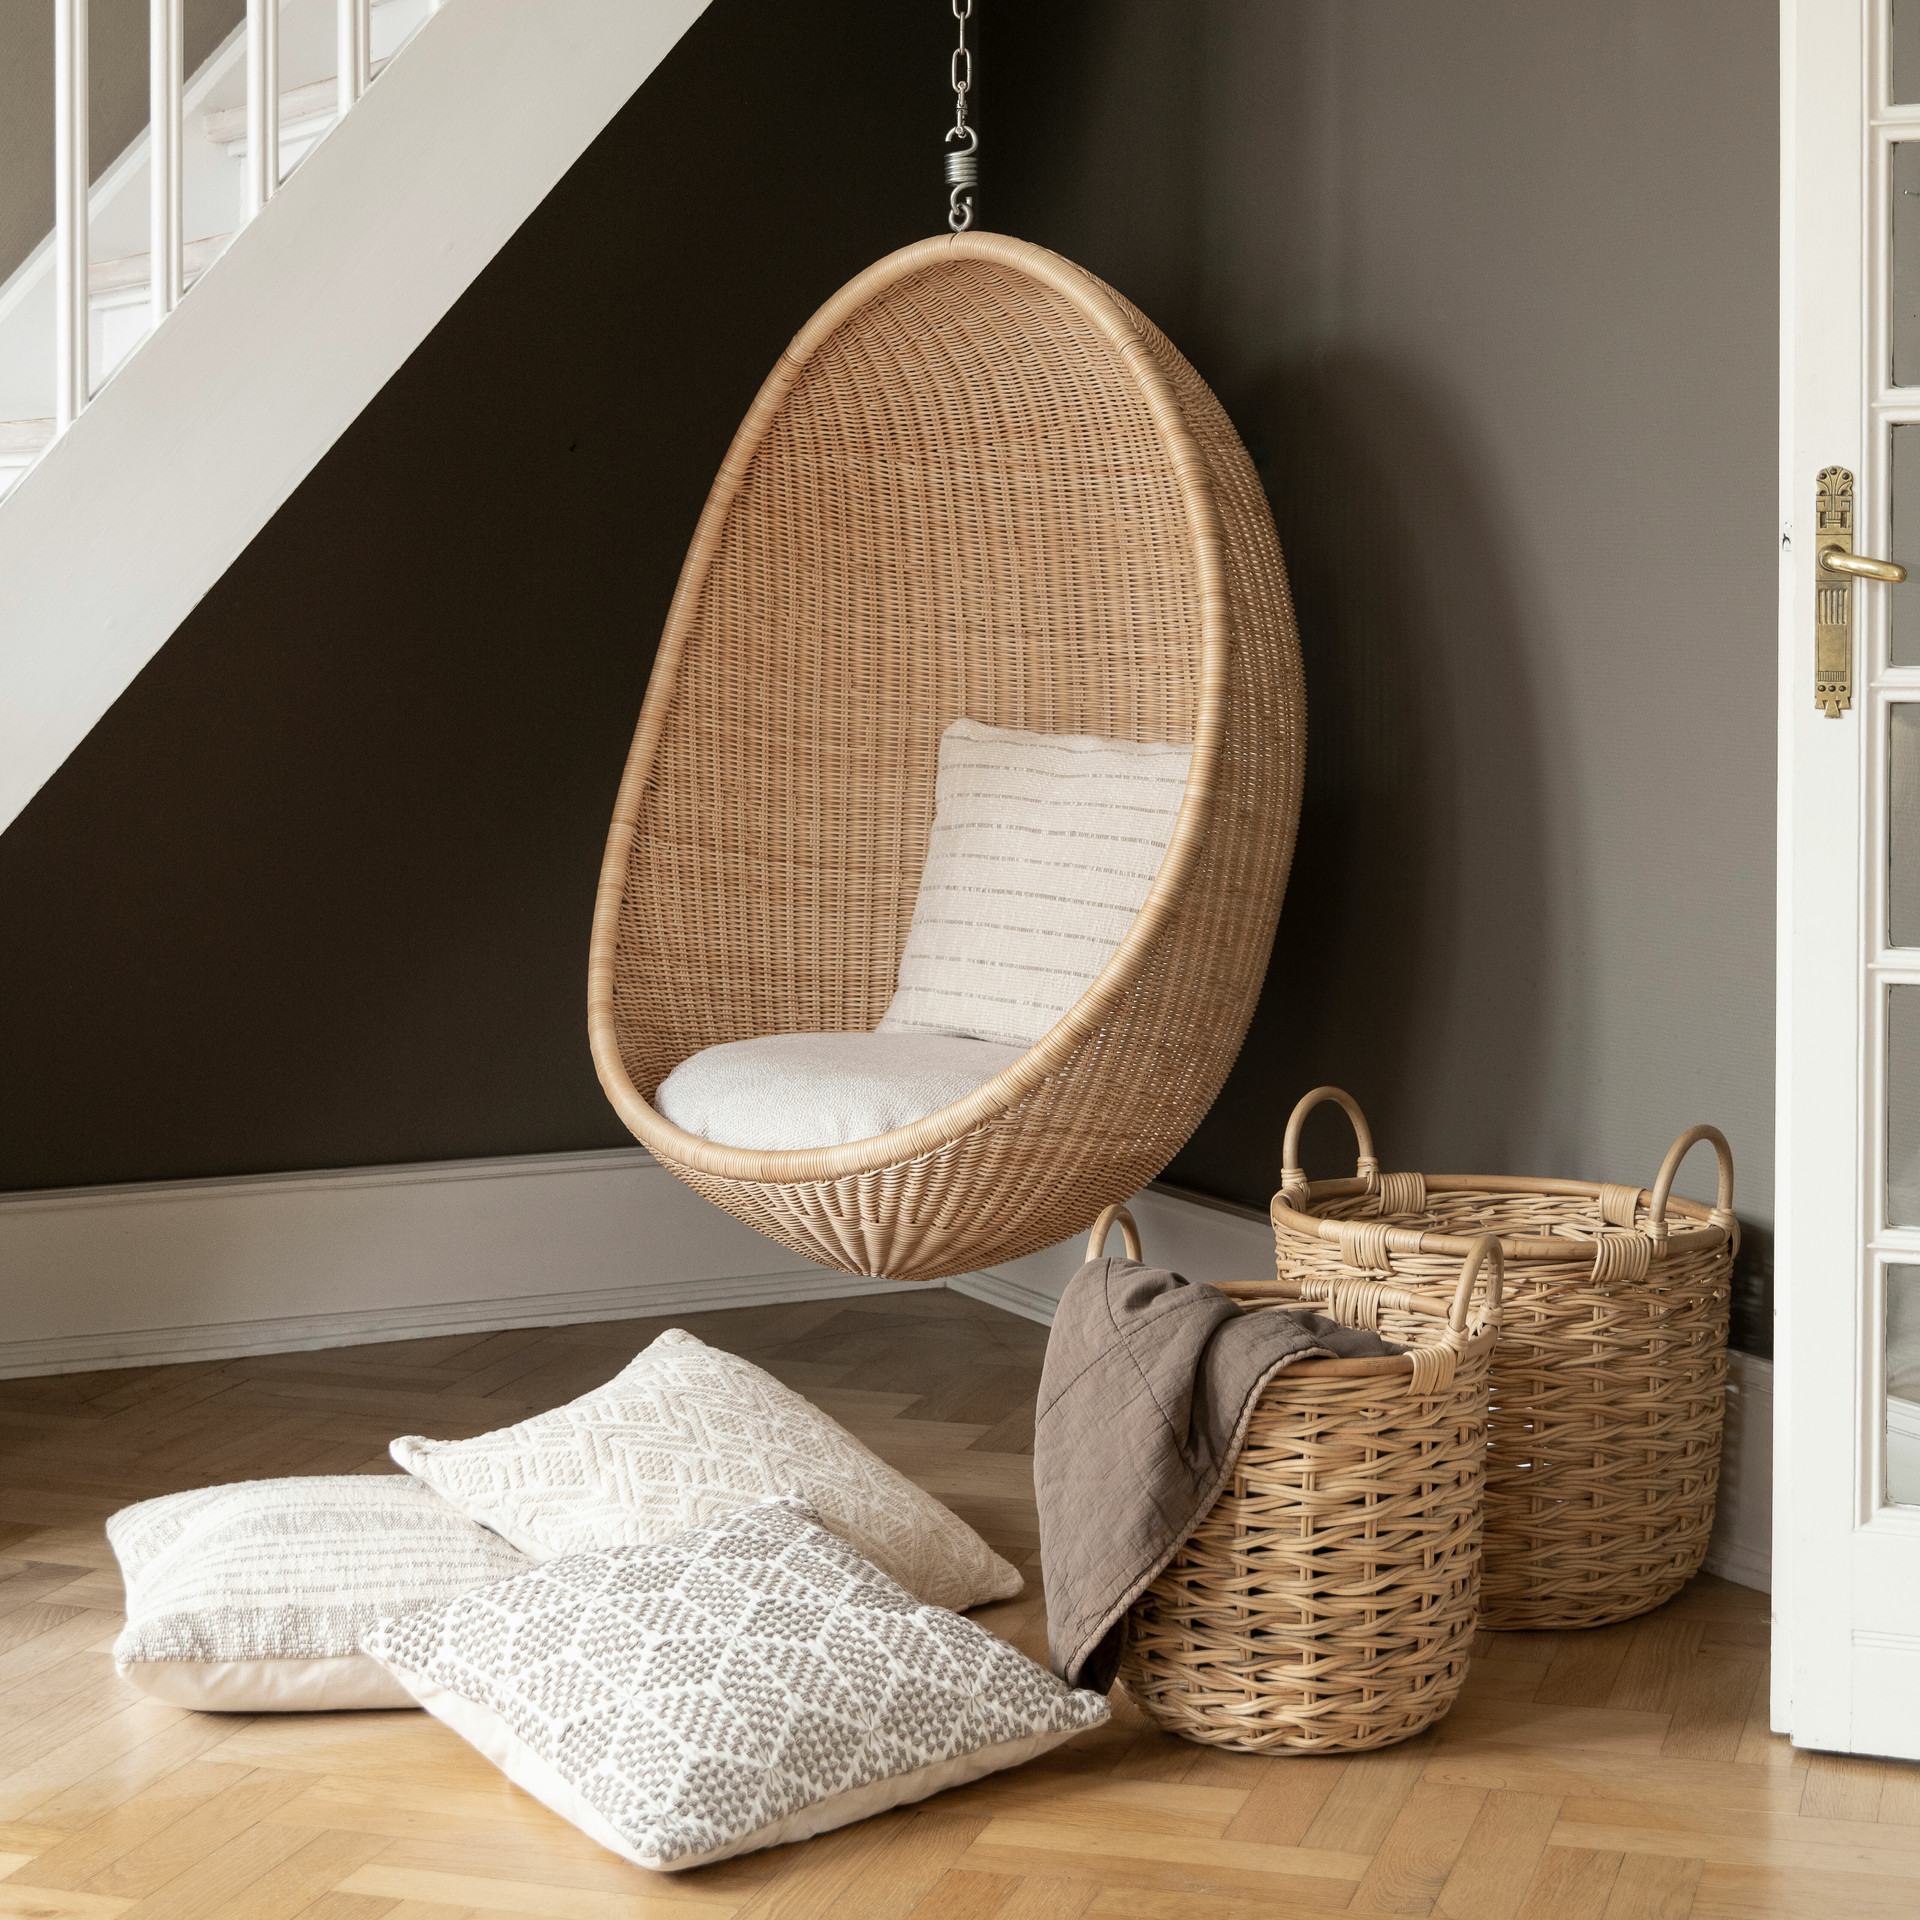 Sika Design Nanna Ditzel Hanging Egg Chair - Rattan Lounge Chair